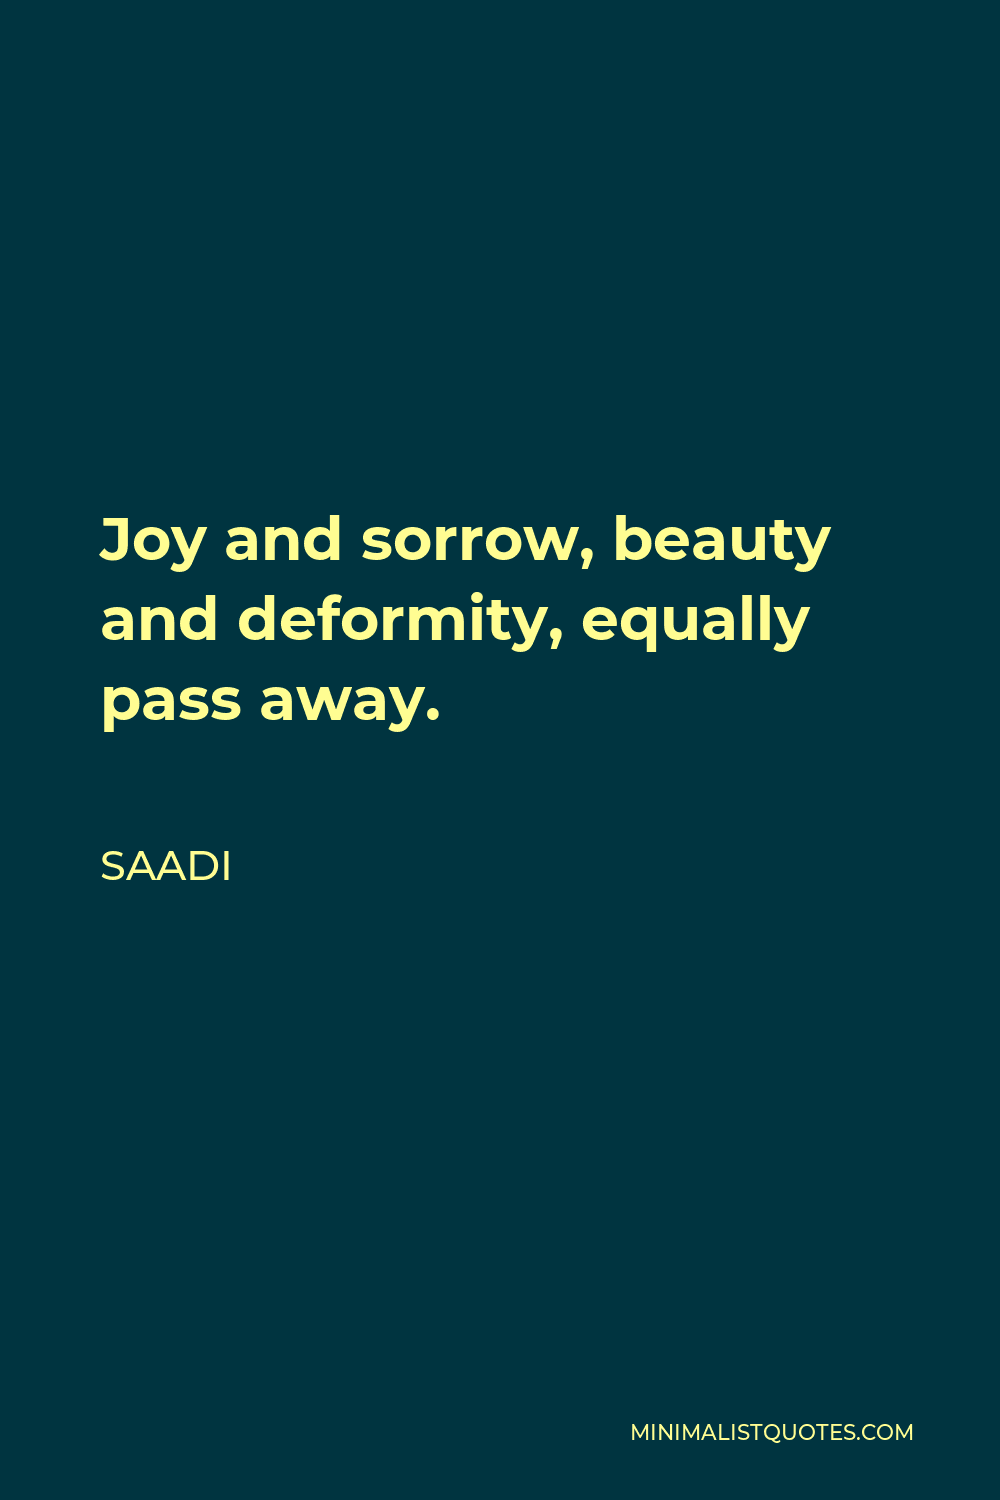 Saadi Quote - Joy and sorrow, beauty and deformity, equally pass away.